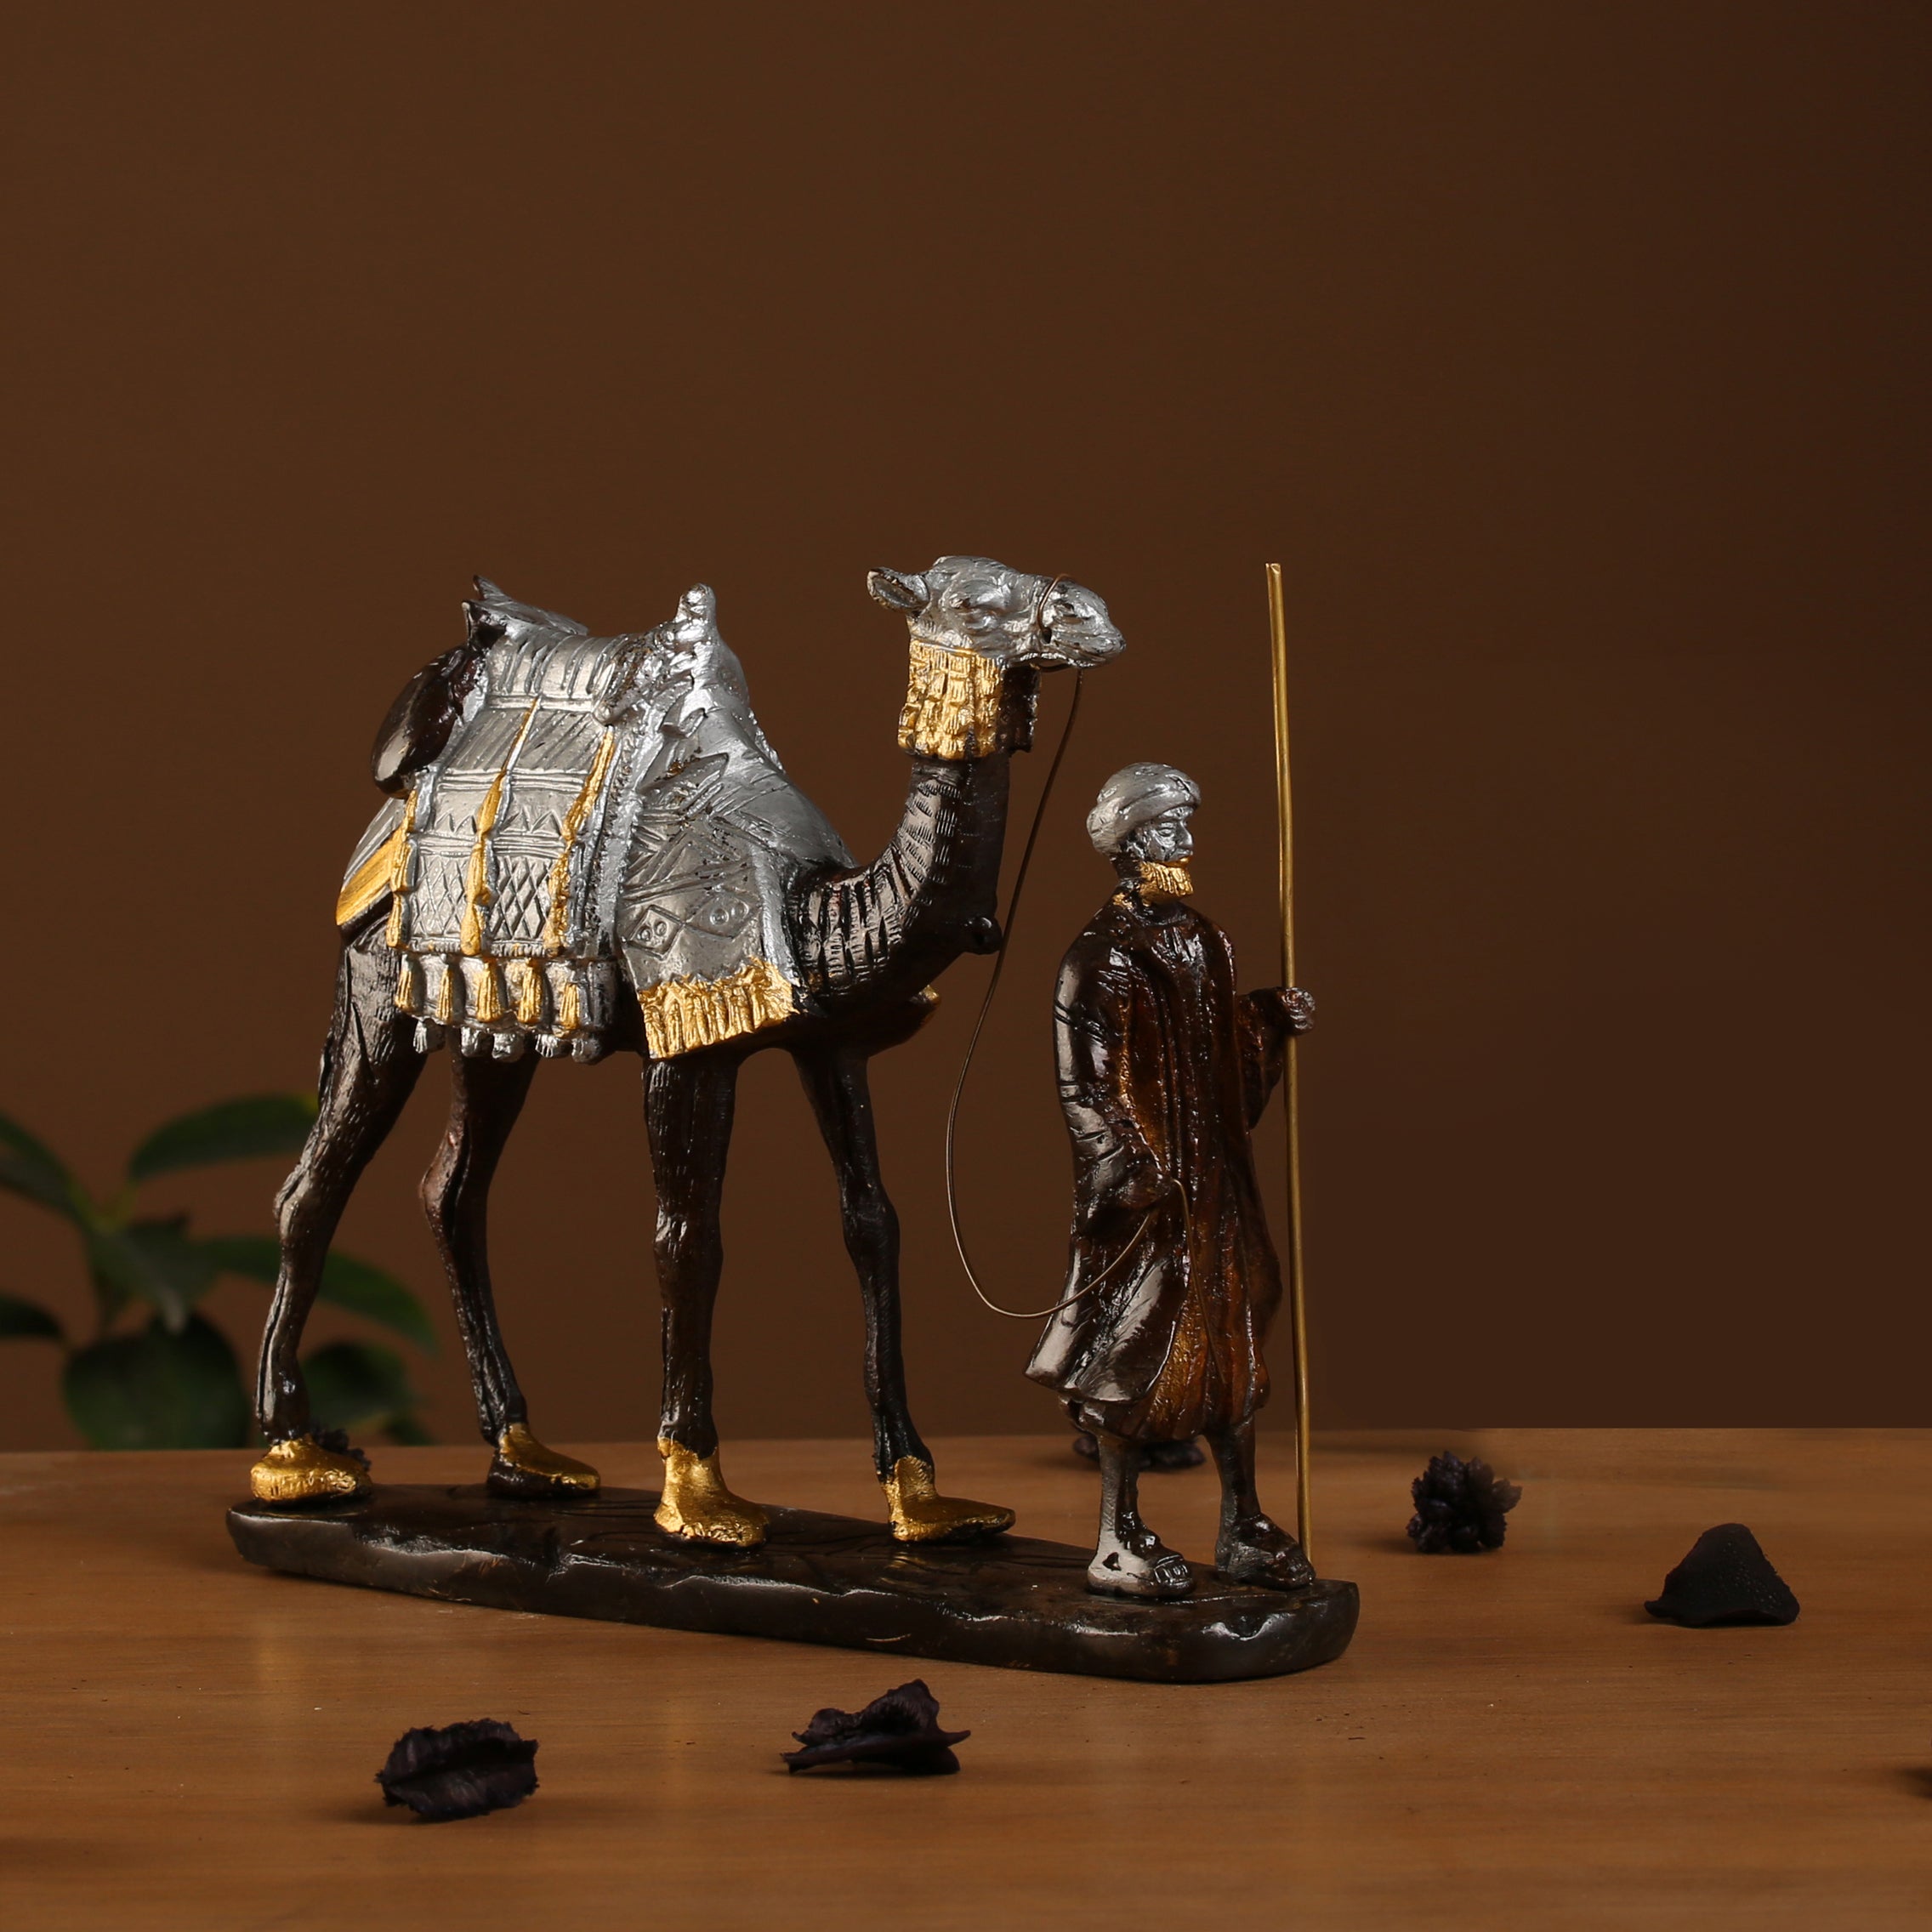 Brass Merchant of Arabia Showpiece, Handcrafted Brass Man with Camel Showpiece